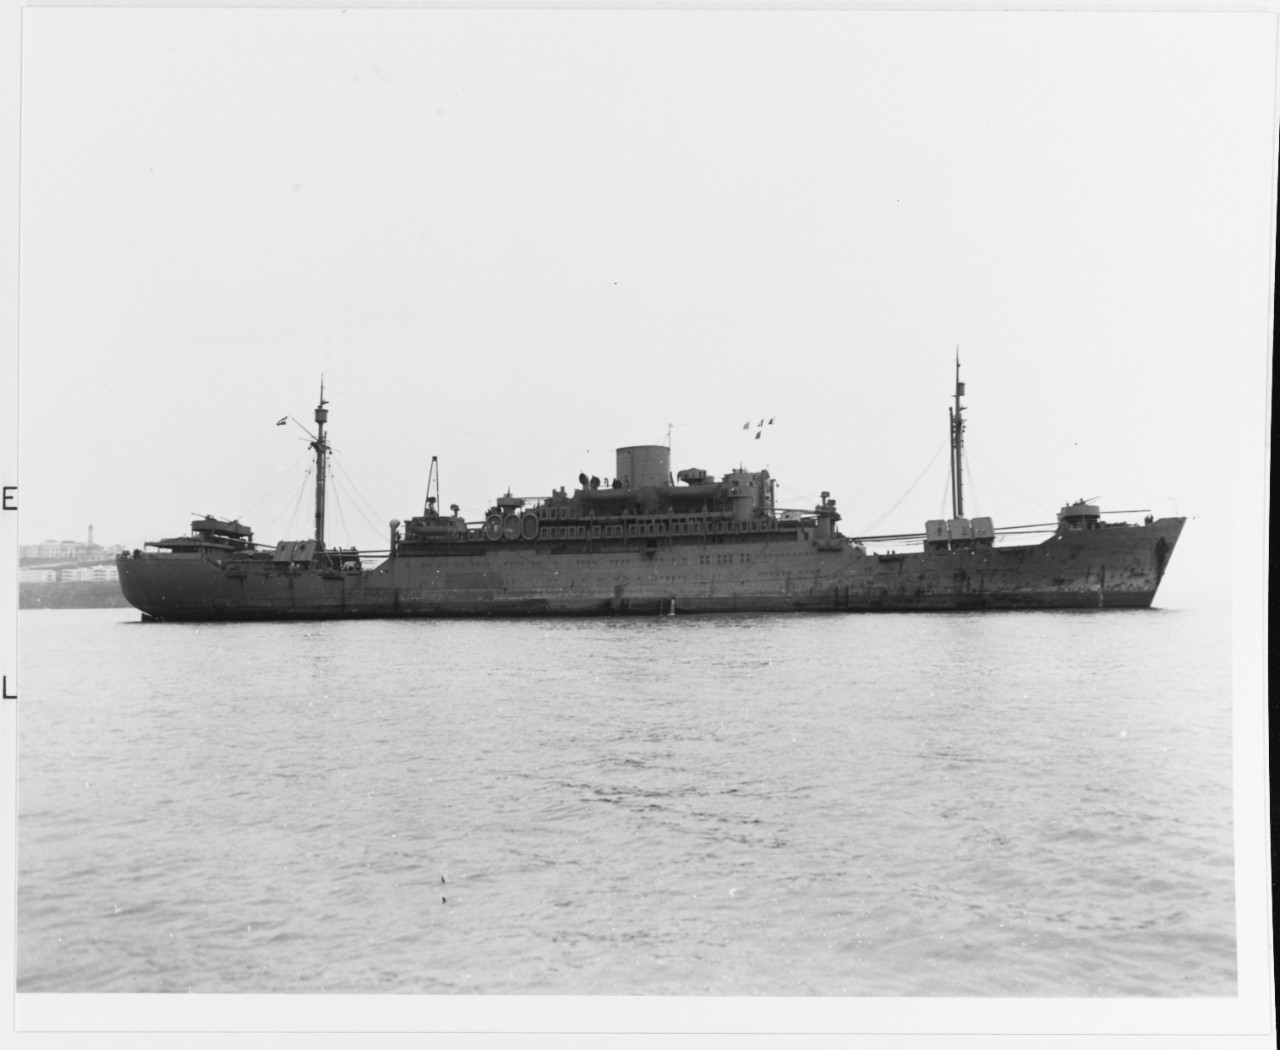 M.S. KLIPFONTEIN (Dutch Passenger-Cargo Ship, 1939-1953)